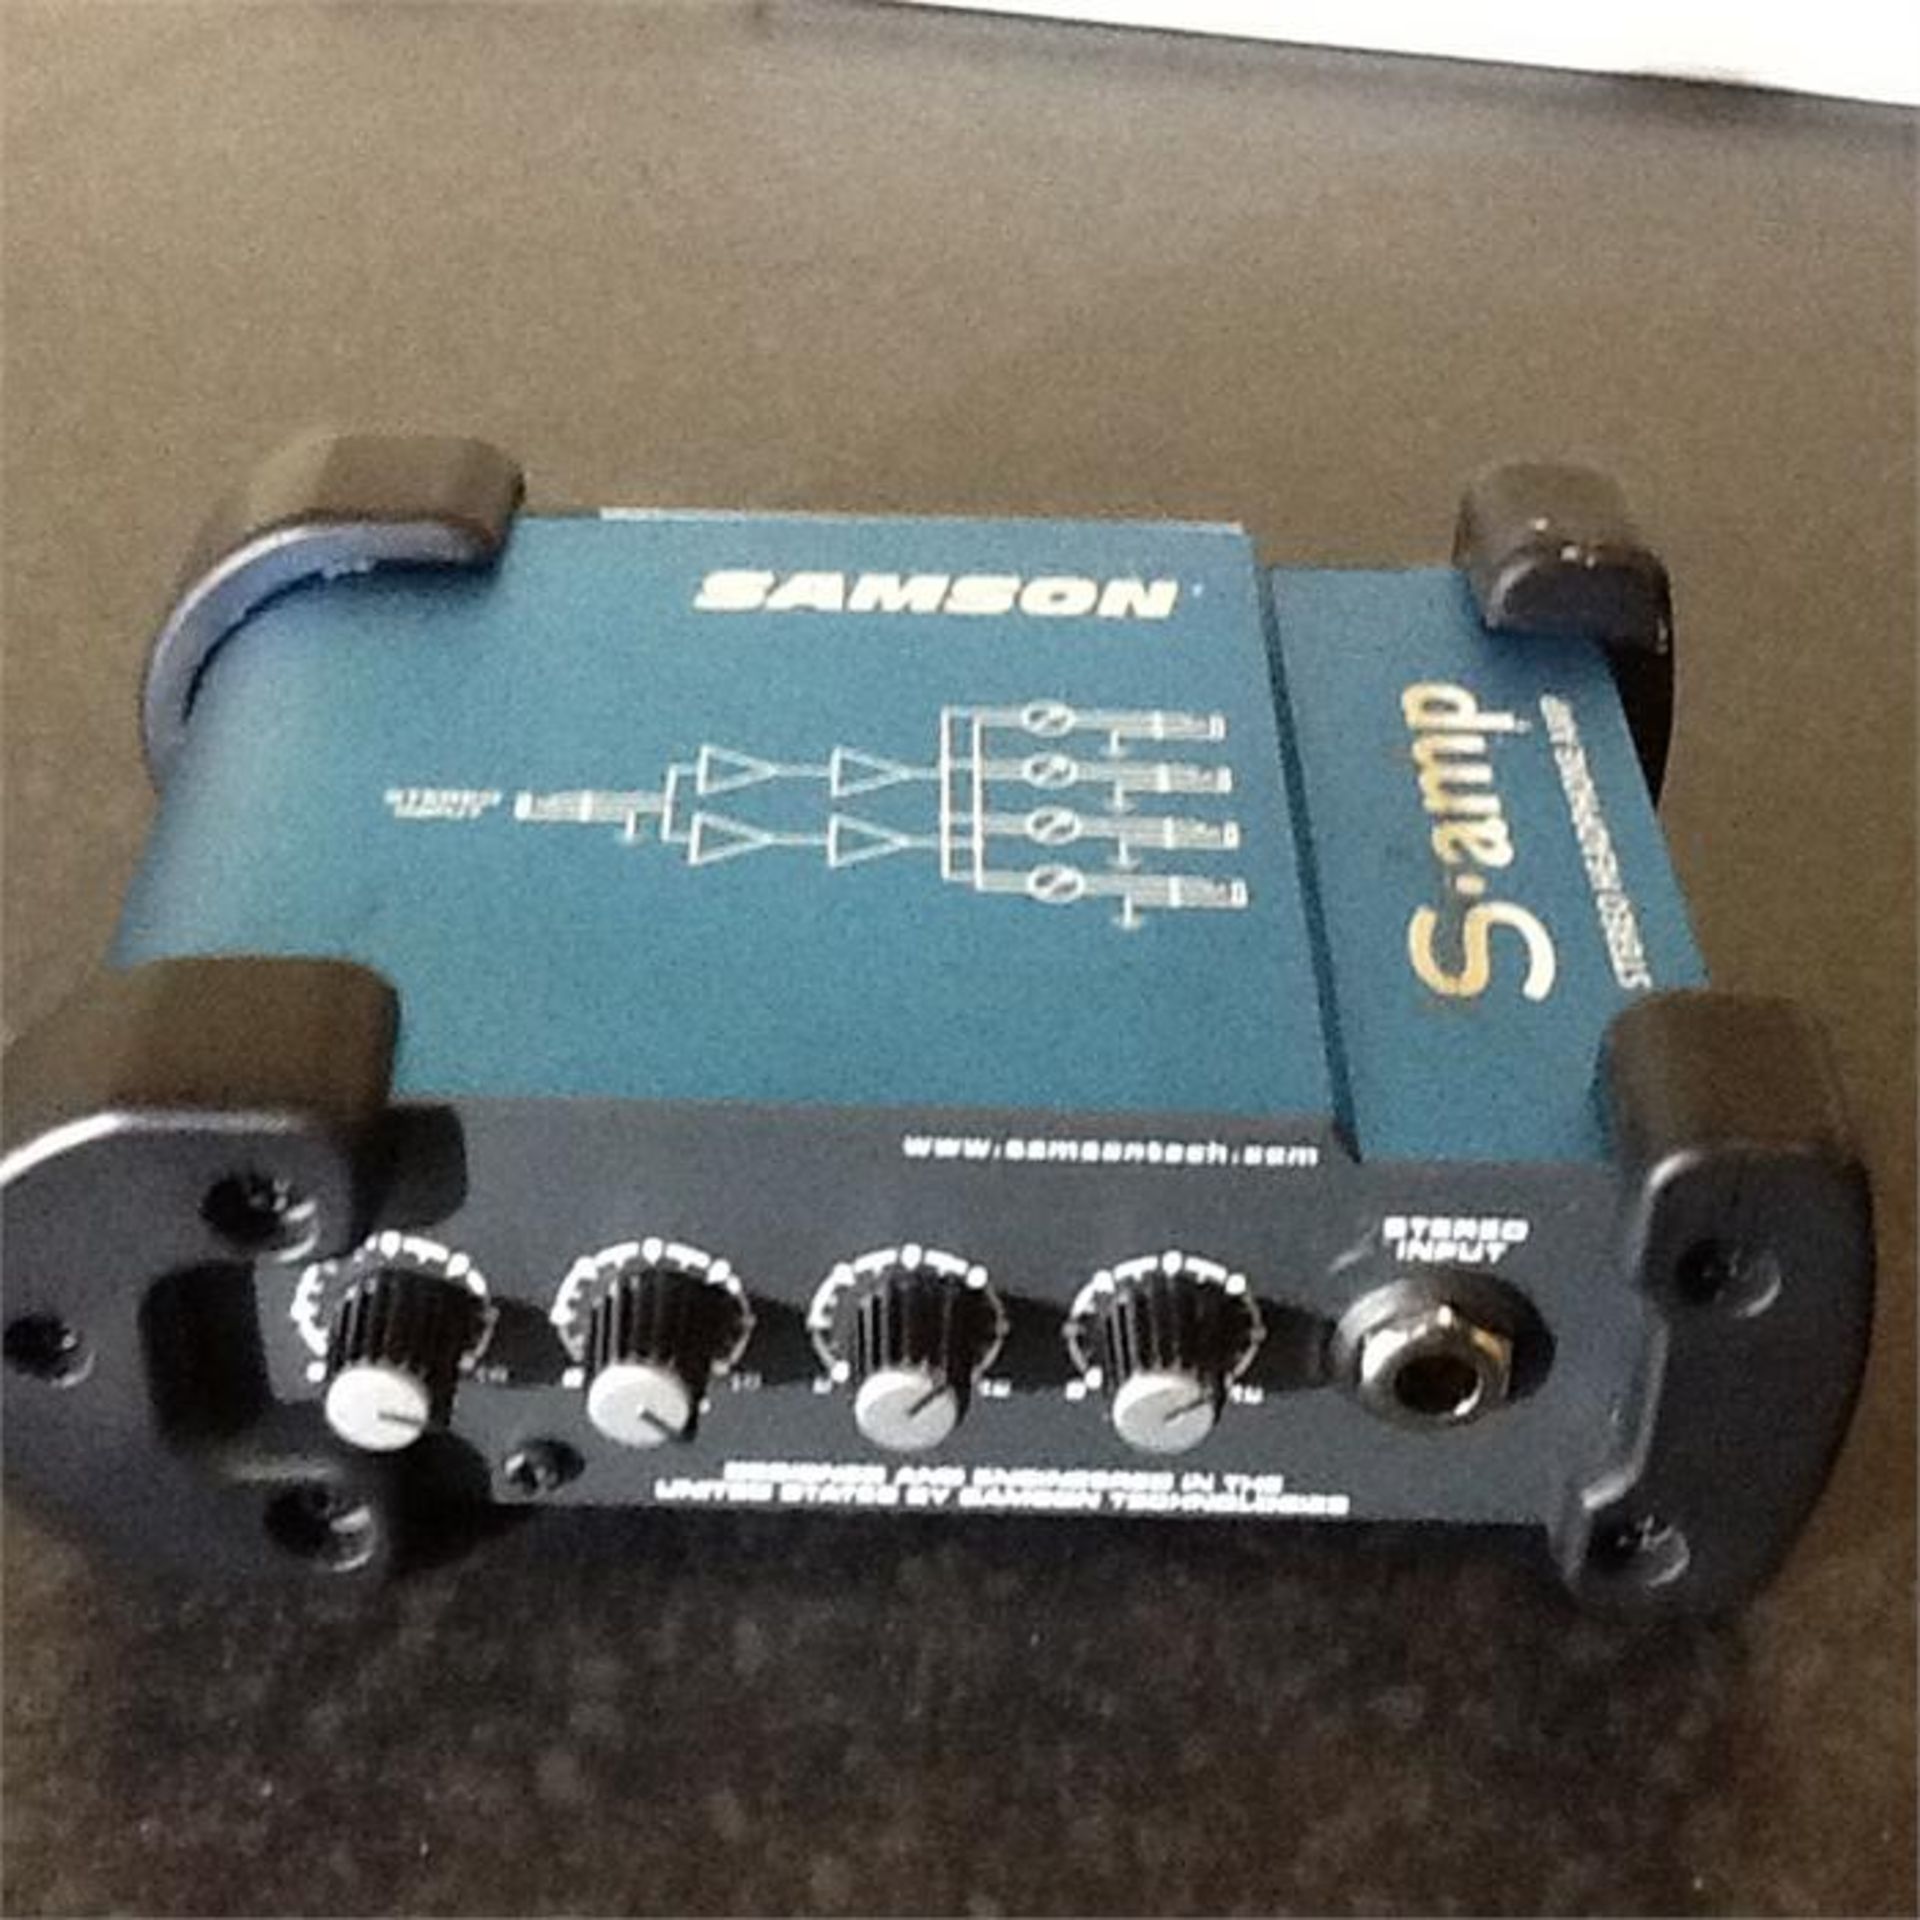 Samson s amp. Headphone amp. No lead - Image 3 of 5